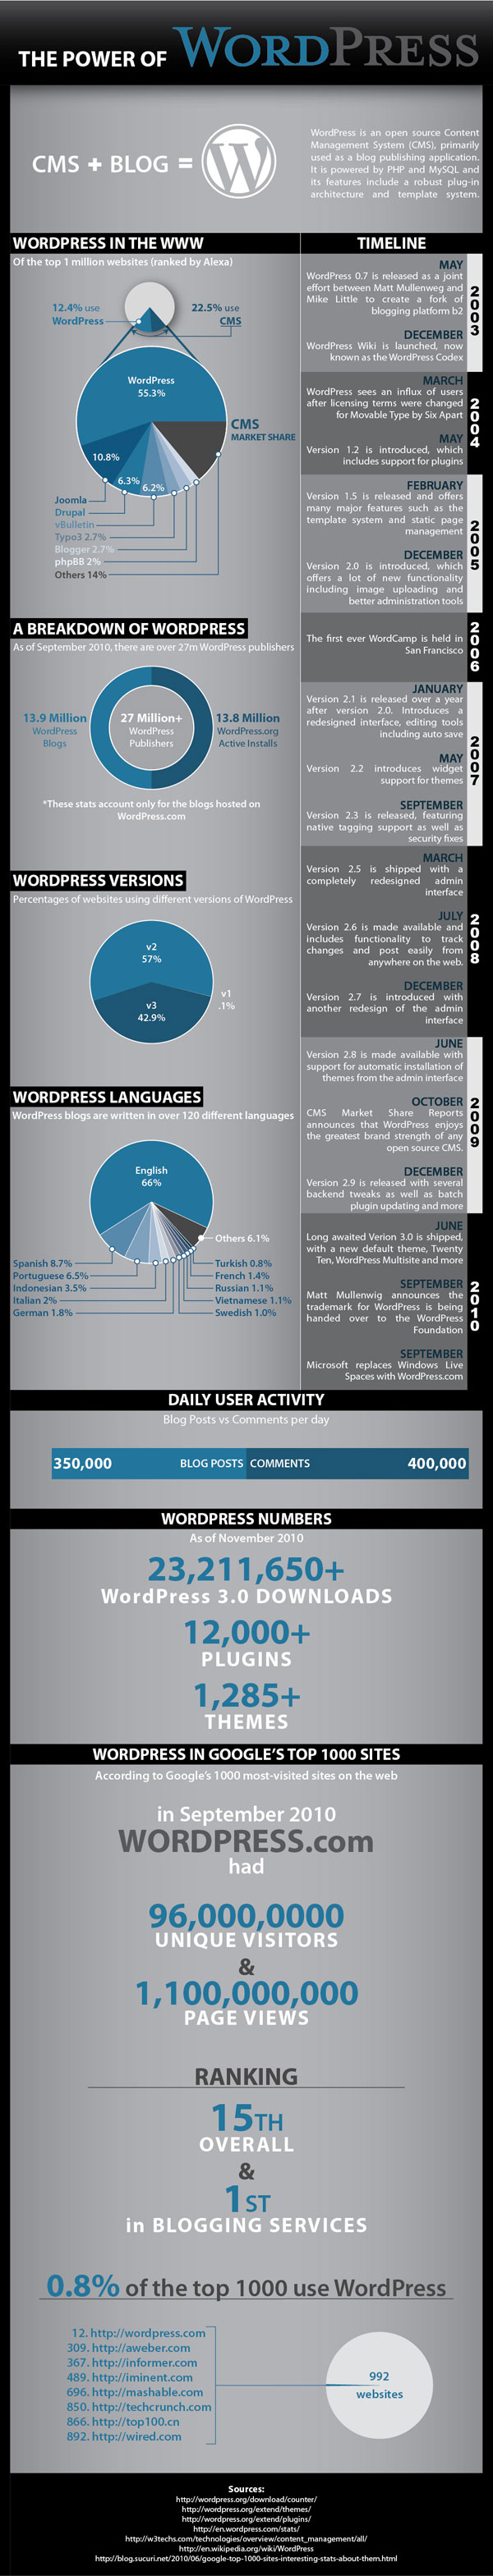 The Power of WordPress - Infographic